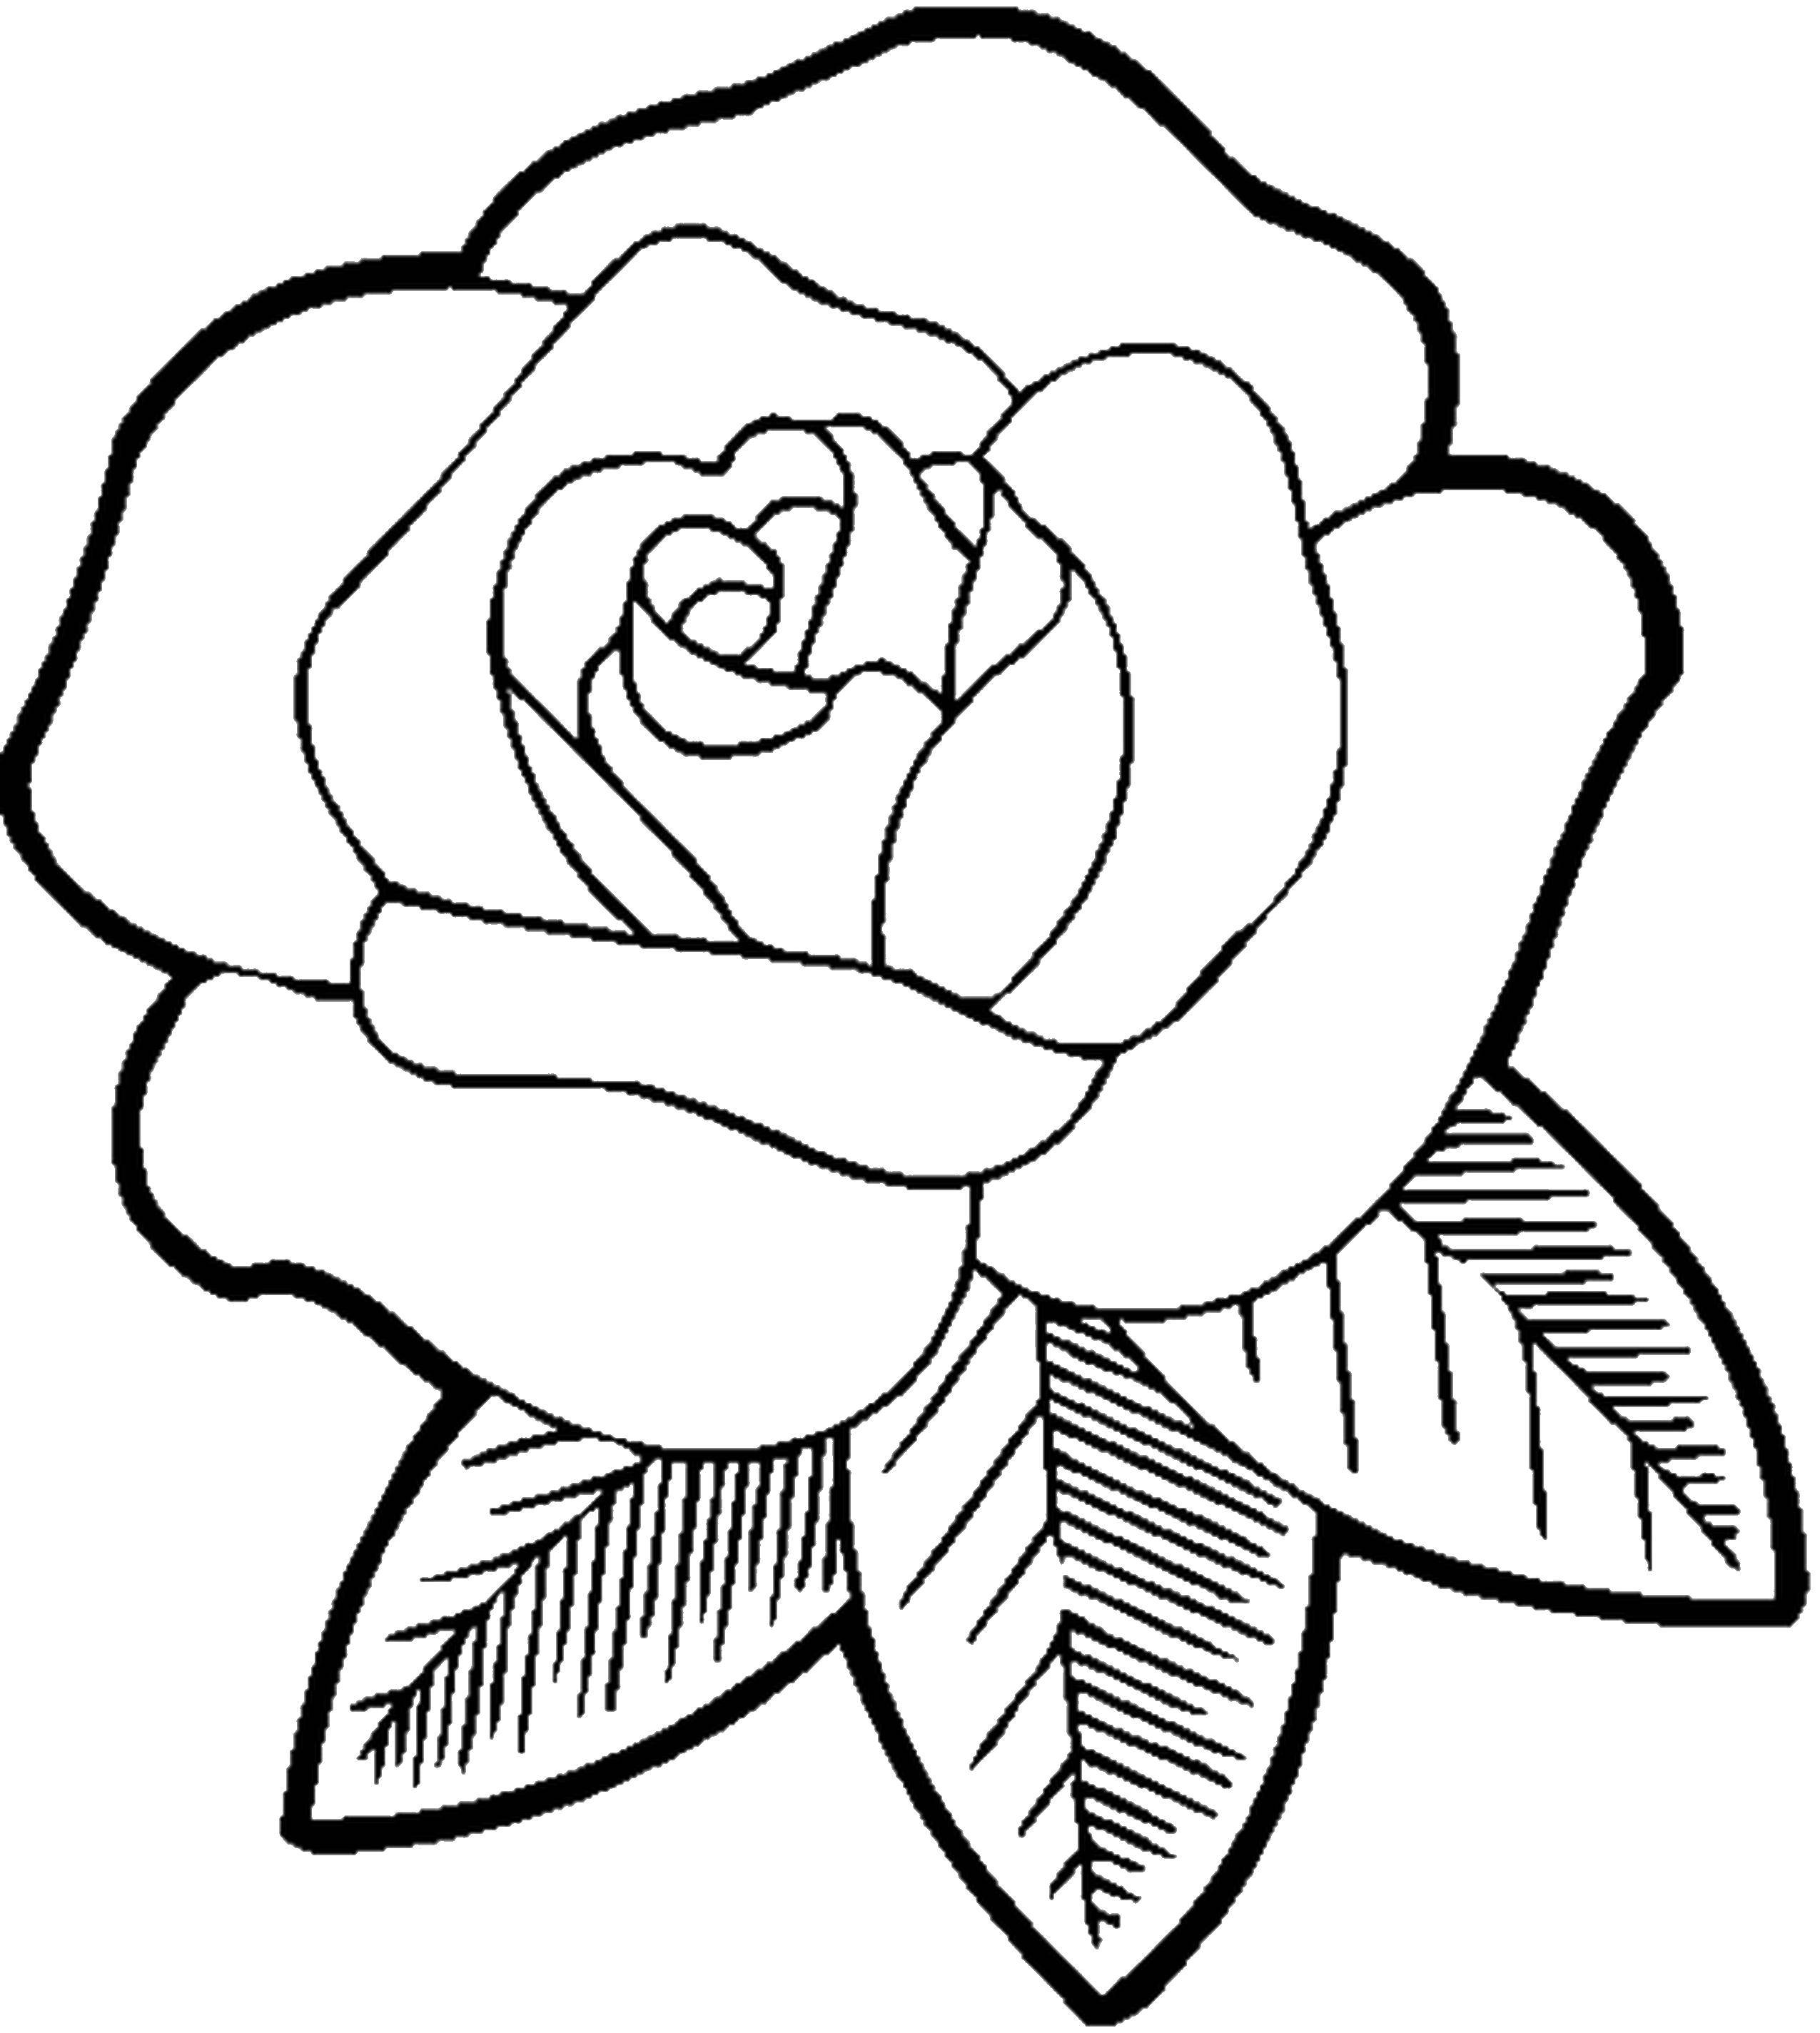 Название: Раскраска Розочка. Категория: цветы. Теги: Цветы, роза.